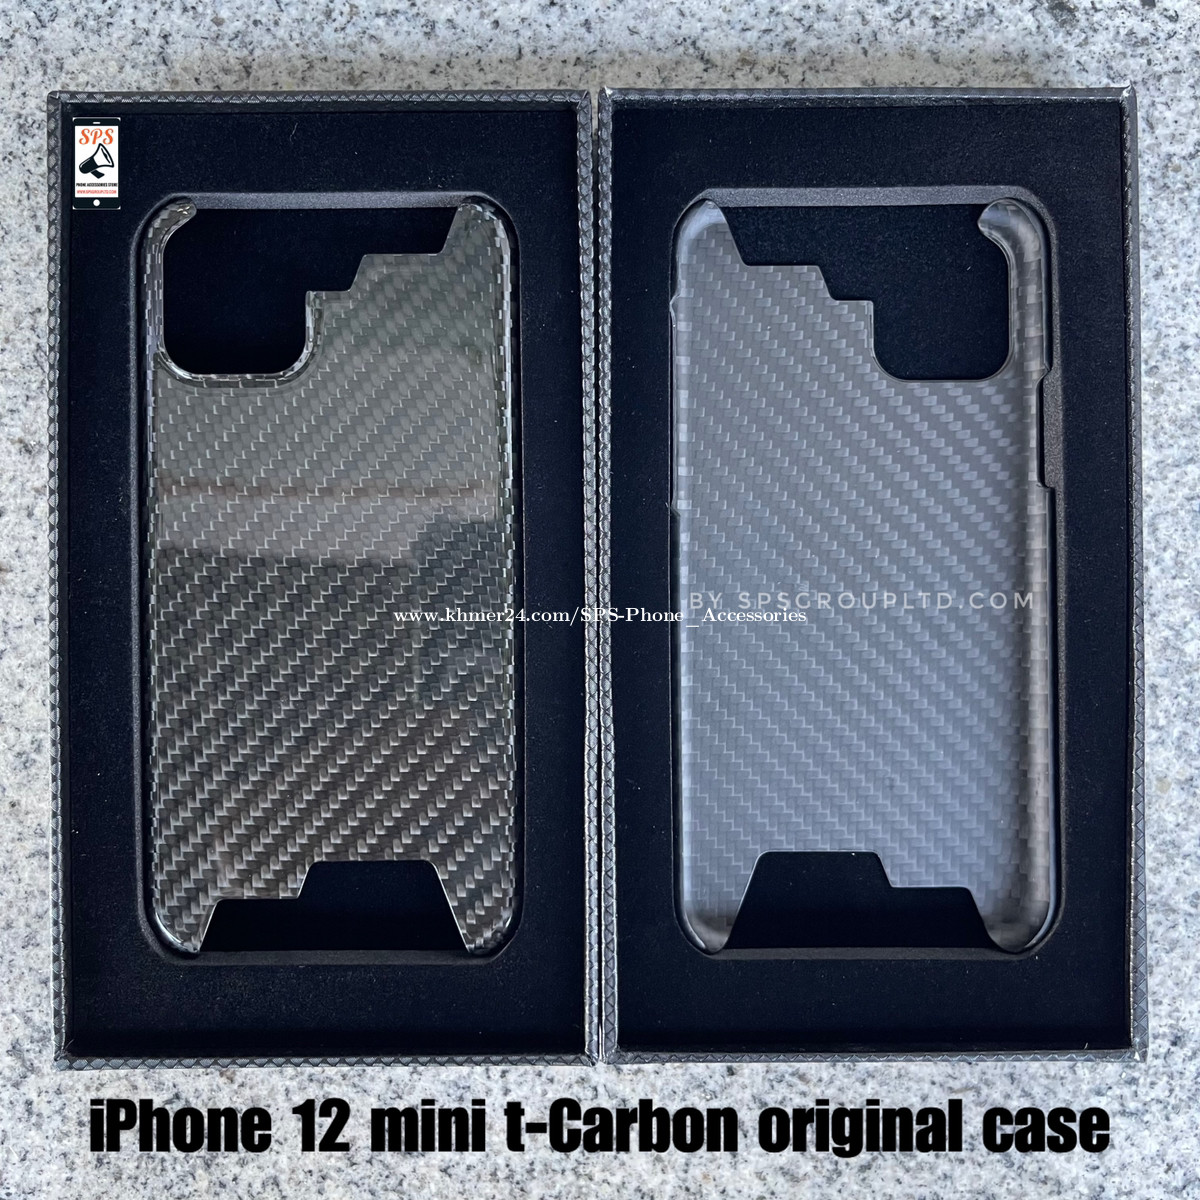 iPhone 12 mini Original T-Carbon Fiber case (Matte Black /Bright black )  price $25.00 in Phnom Penh, Cambodia - SPS Phone Accessories Store |  Khmer24.com